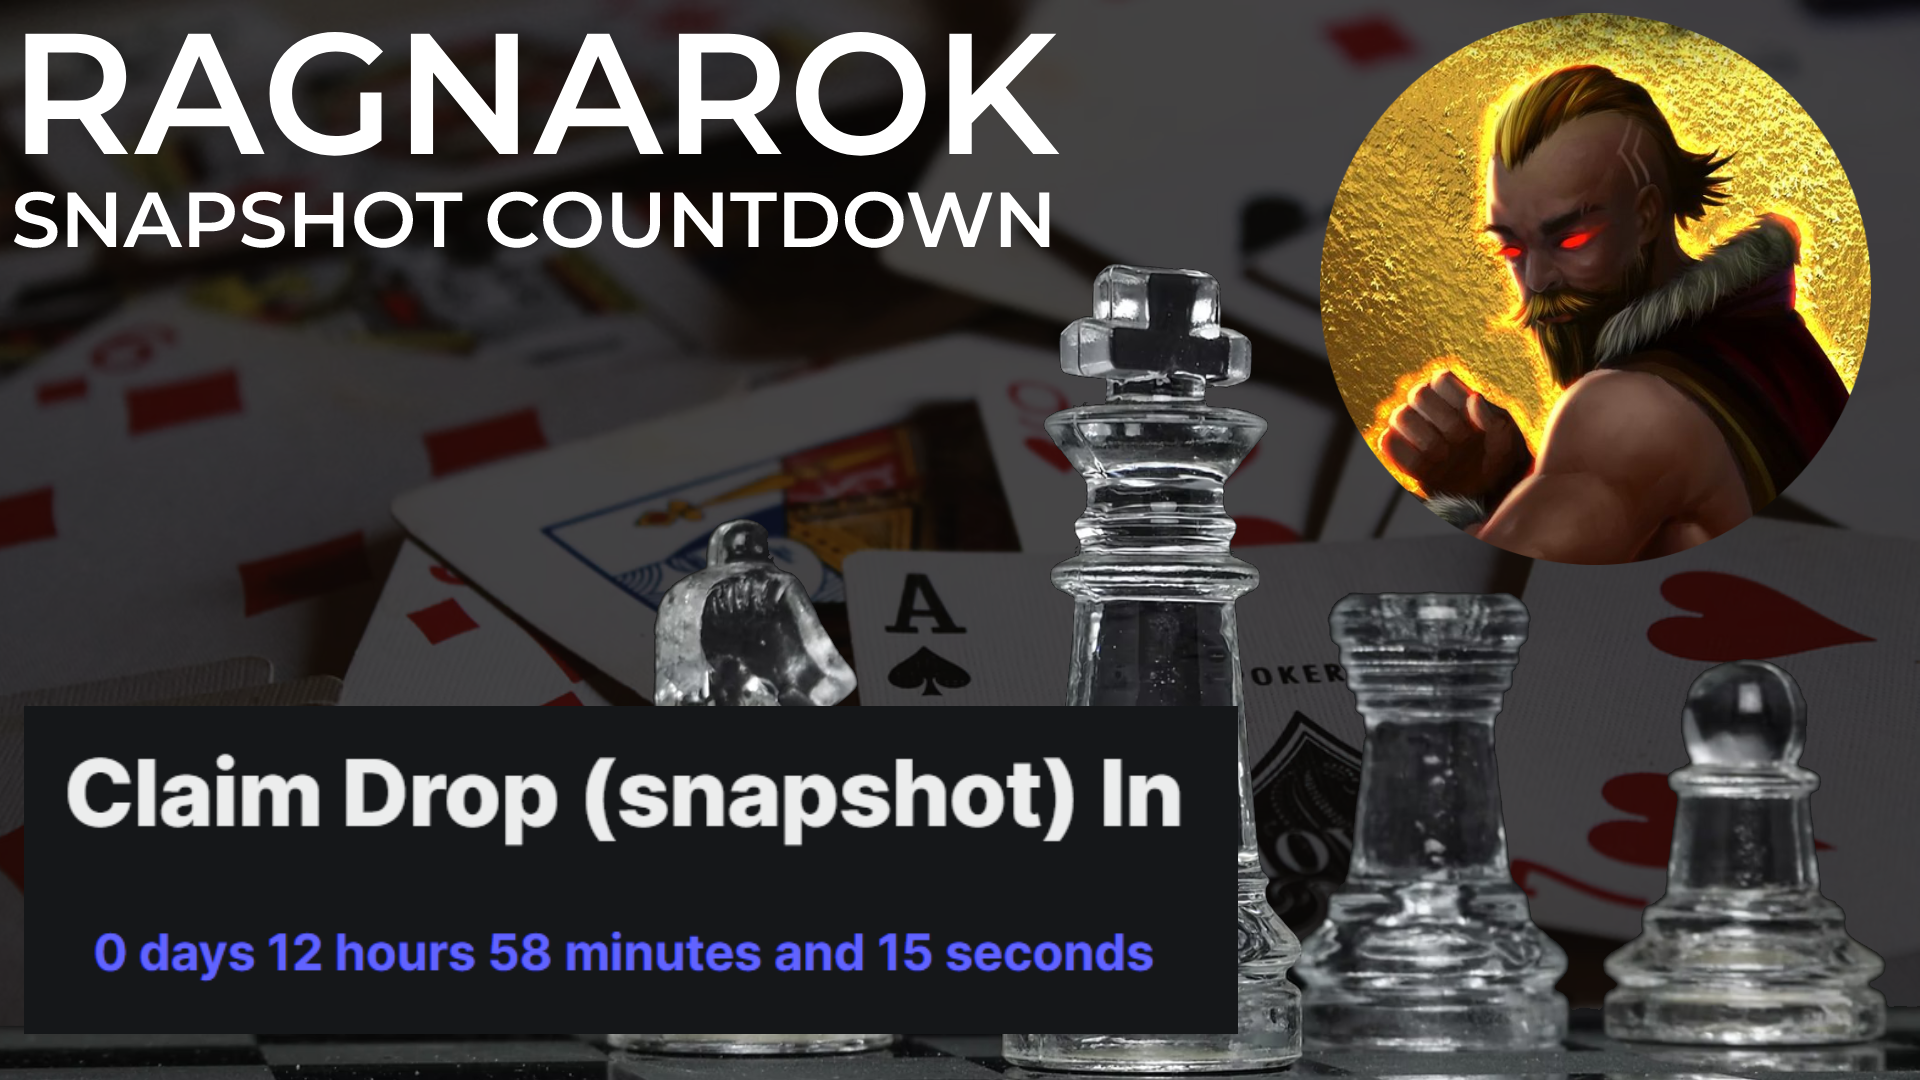 @ragnarok.game/ragnarok-snapshot-countdown